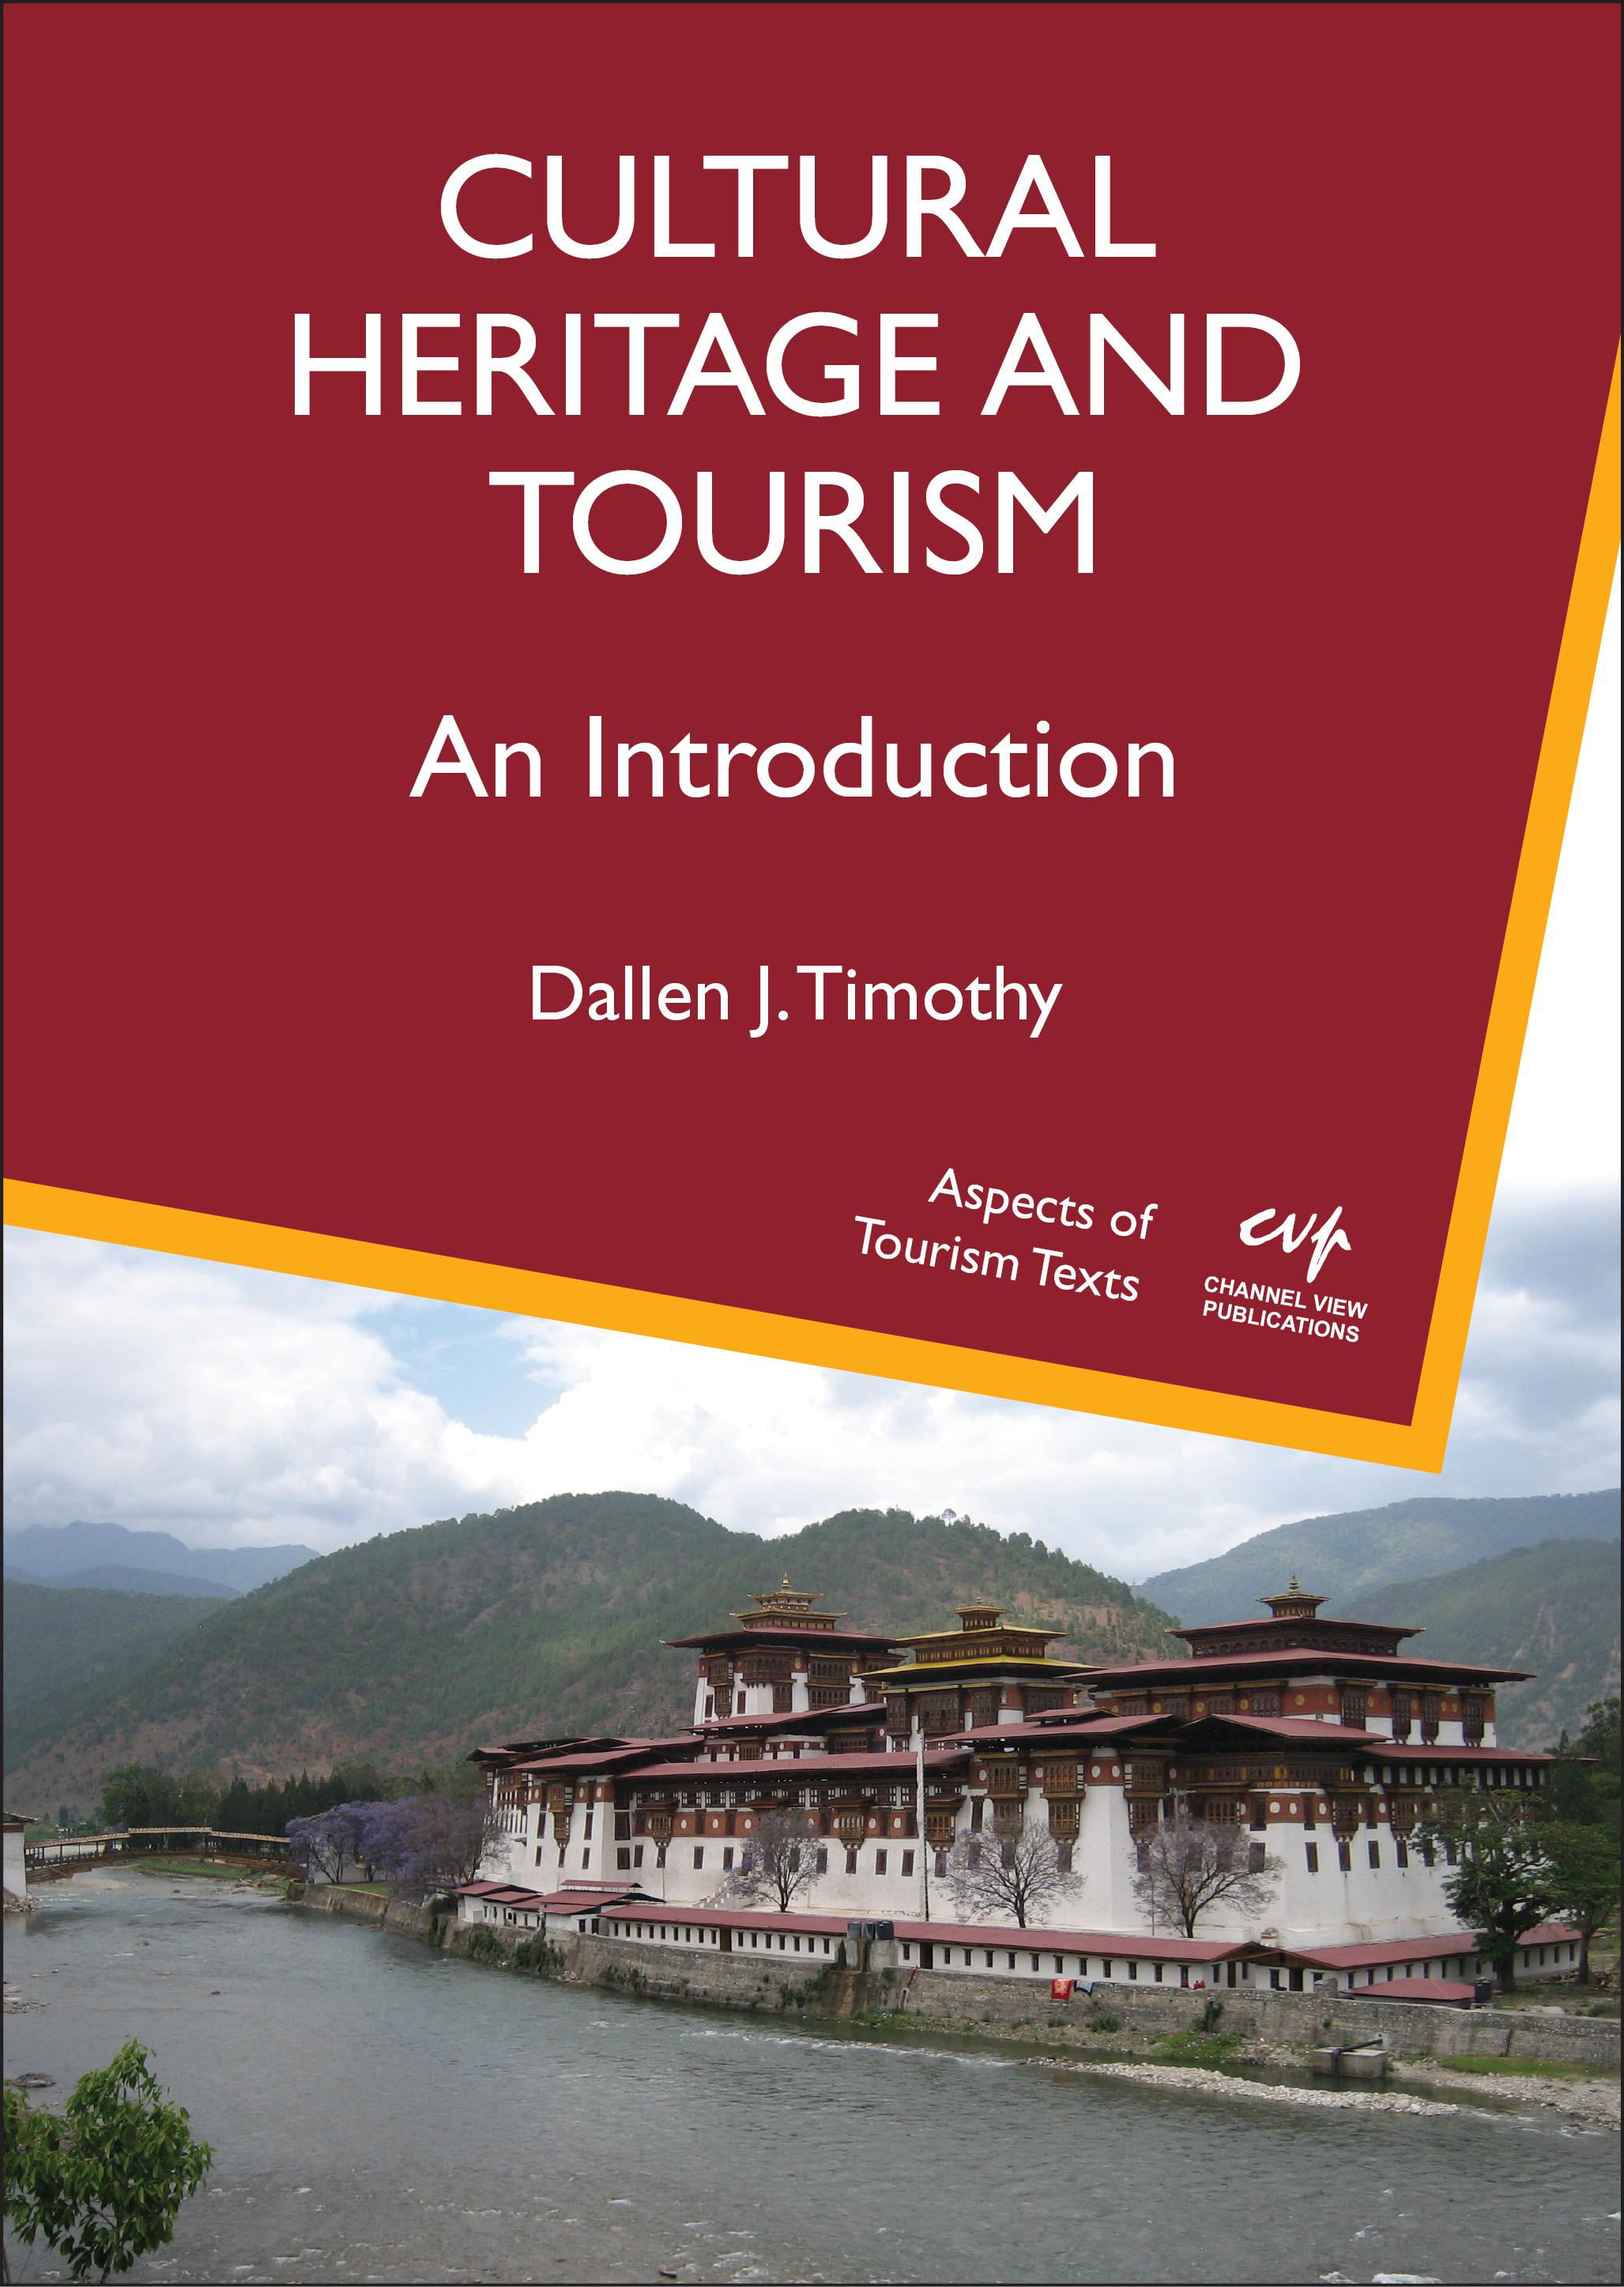 Tourism texts. Heritage Tourism. World Tourism учебник. Cultural Heritage. Cover book Tourism.